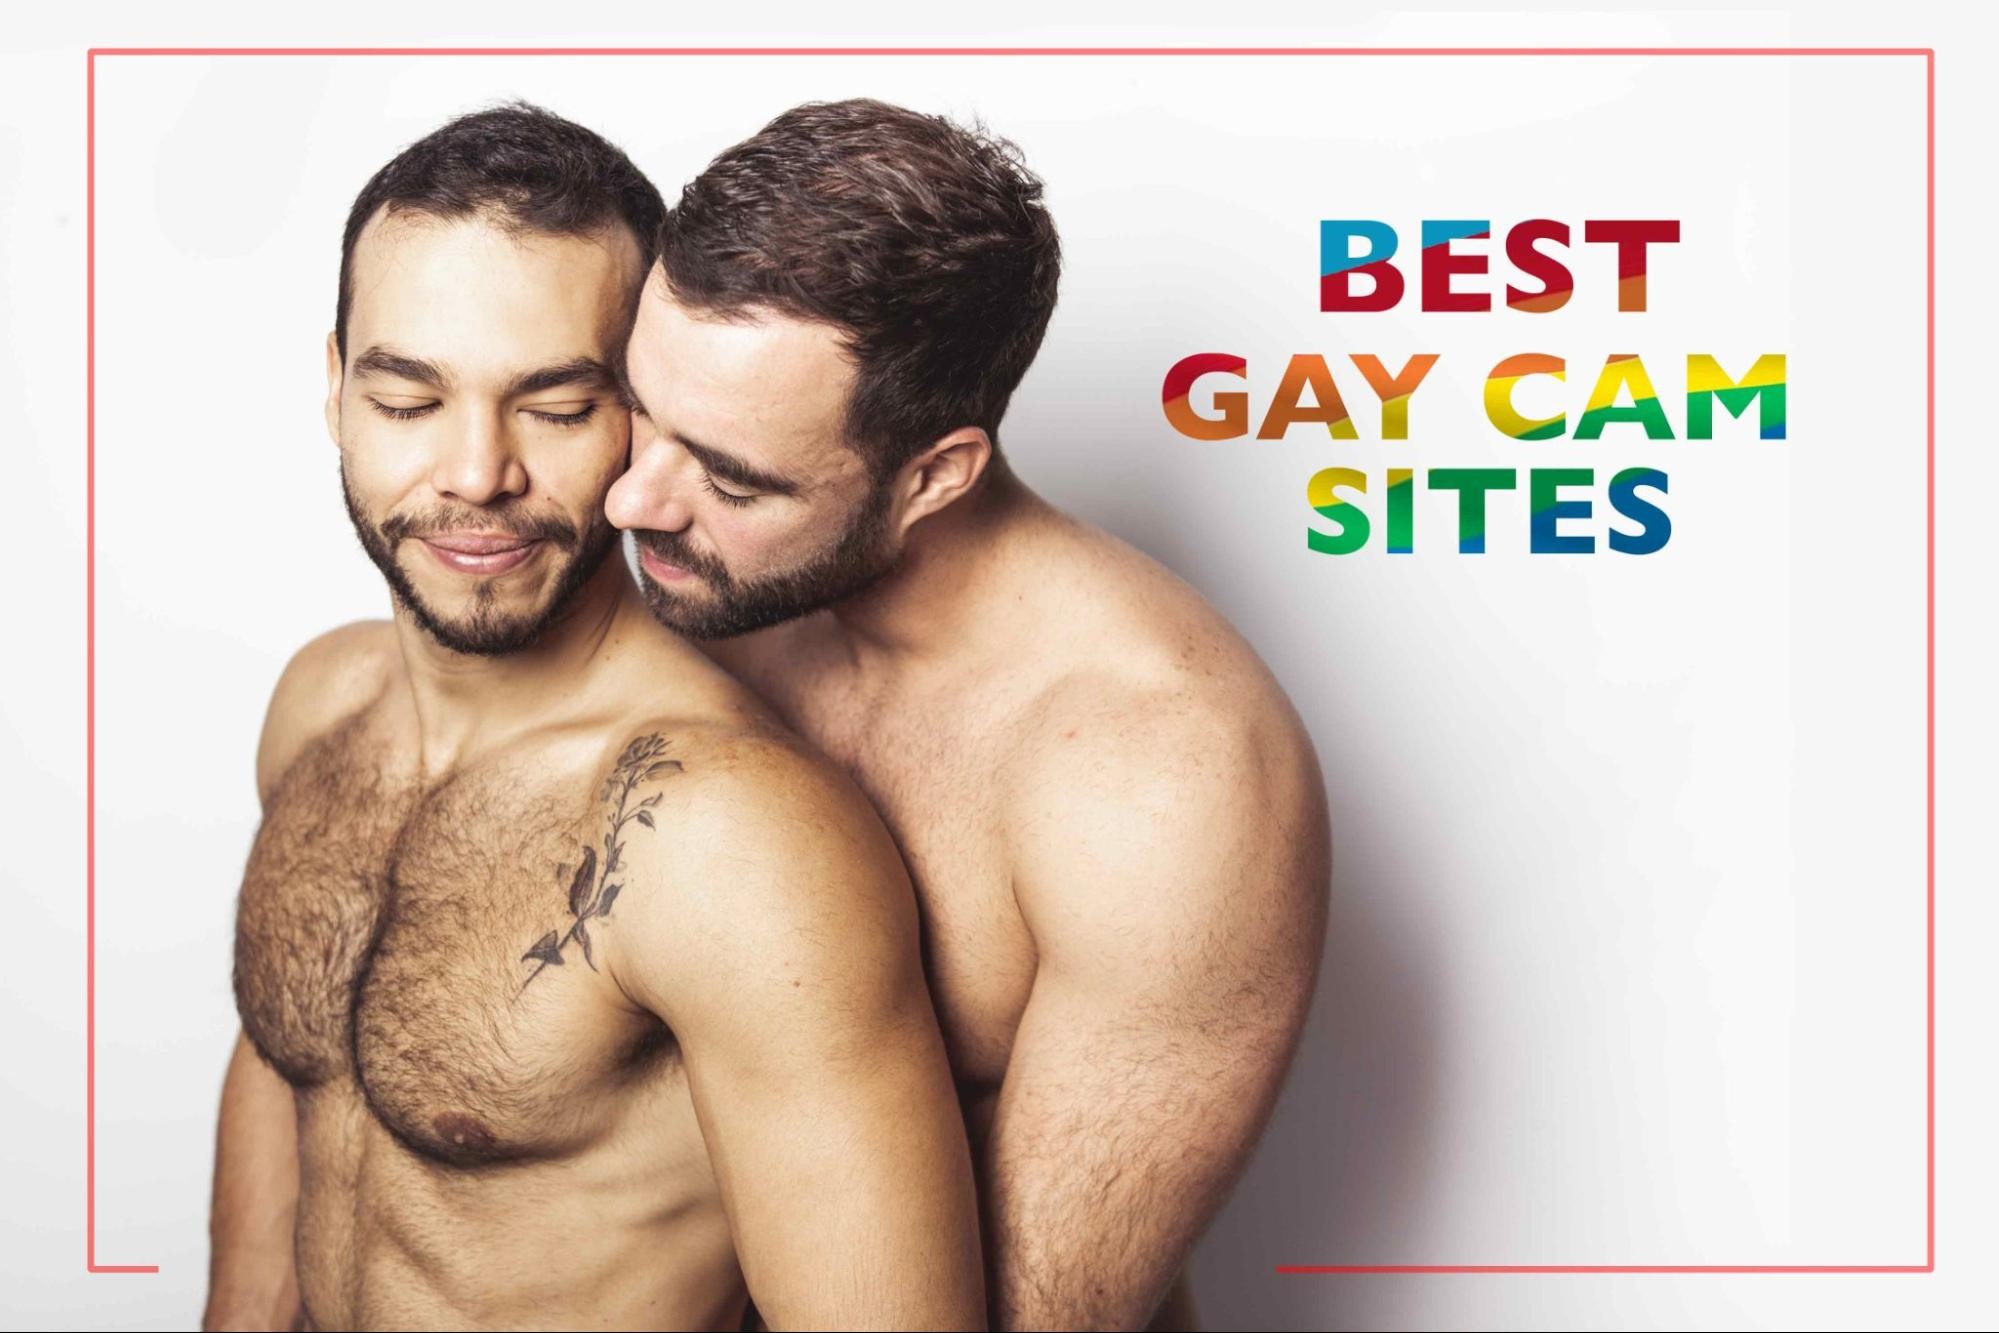 Best gay cam sites